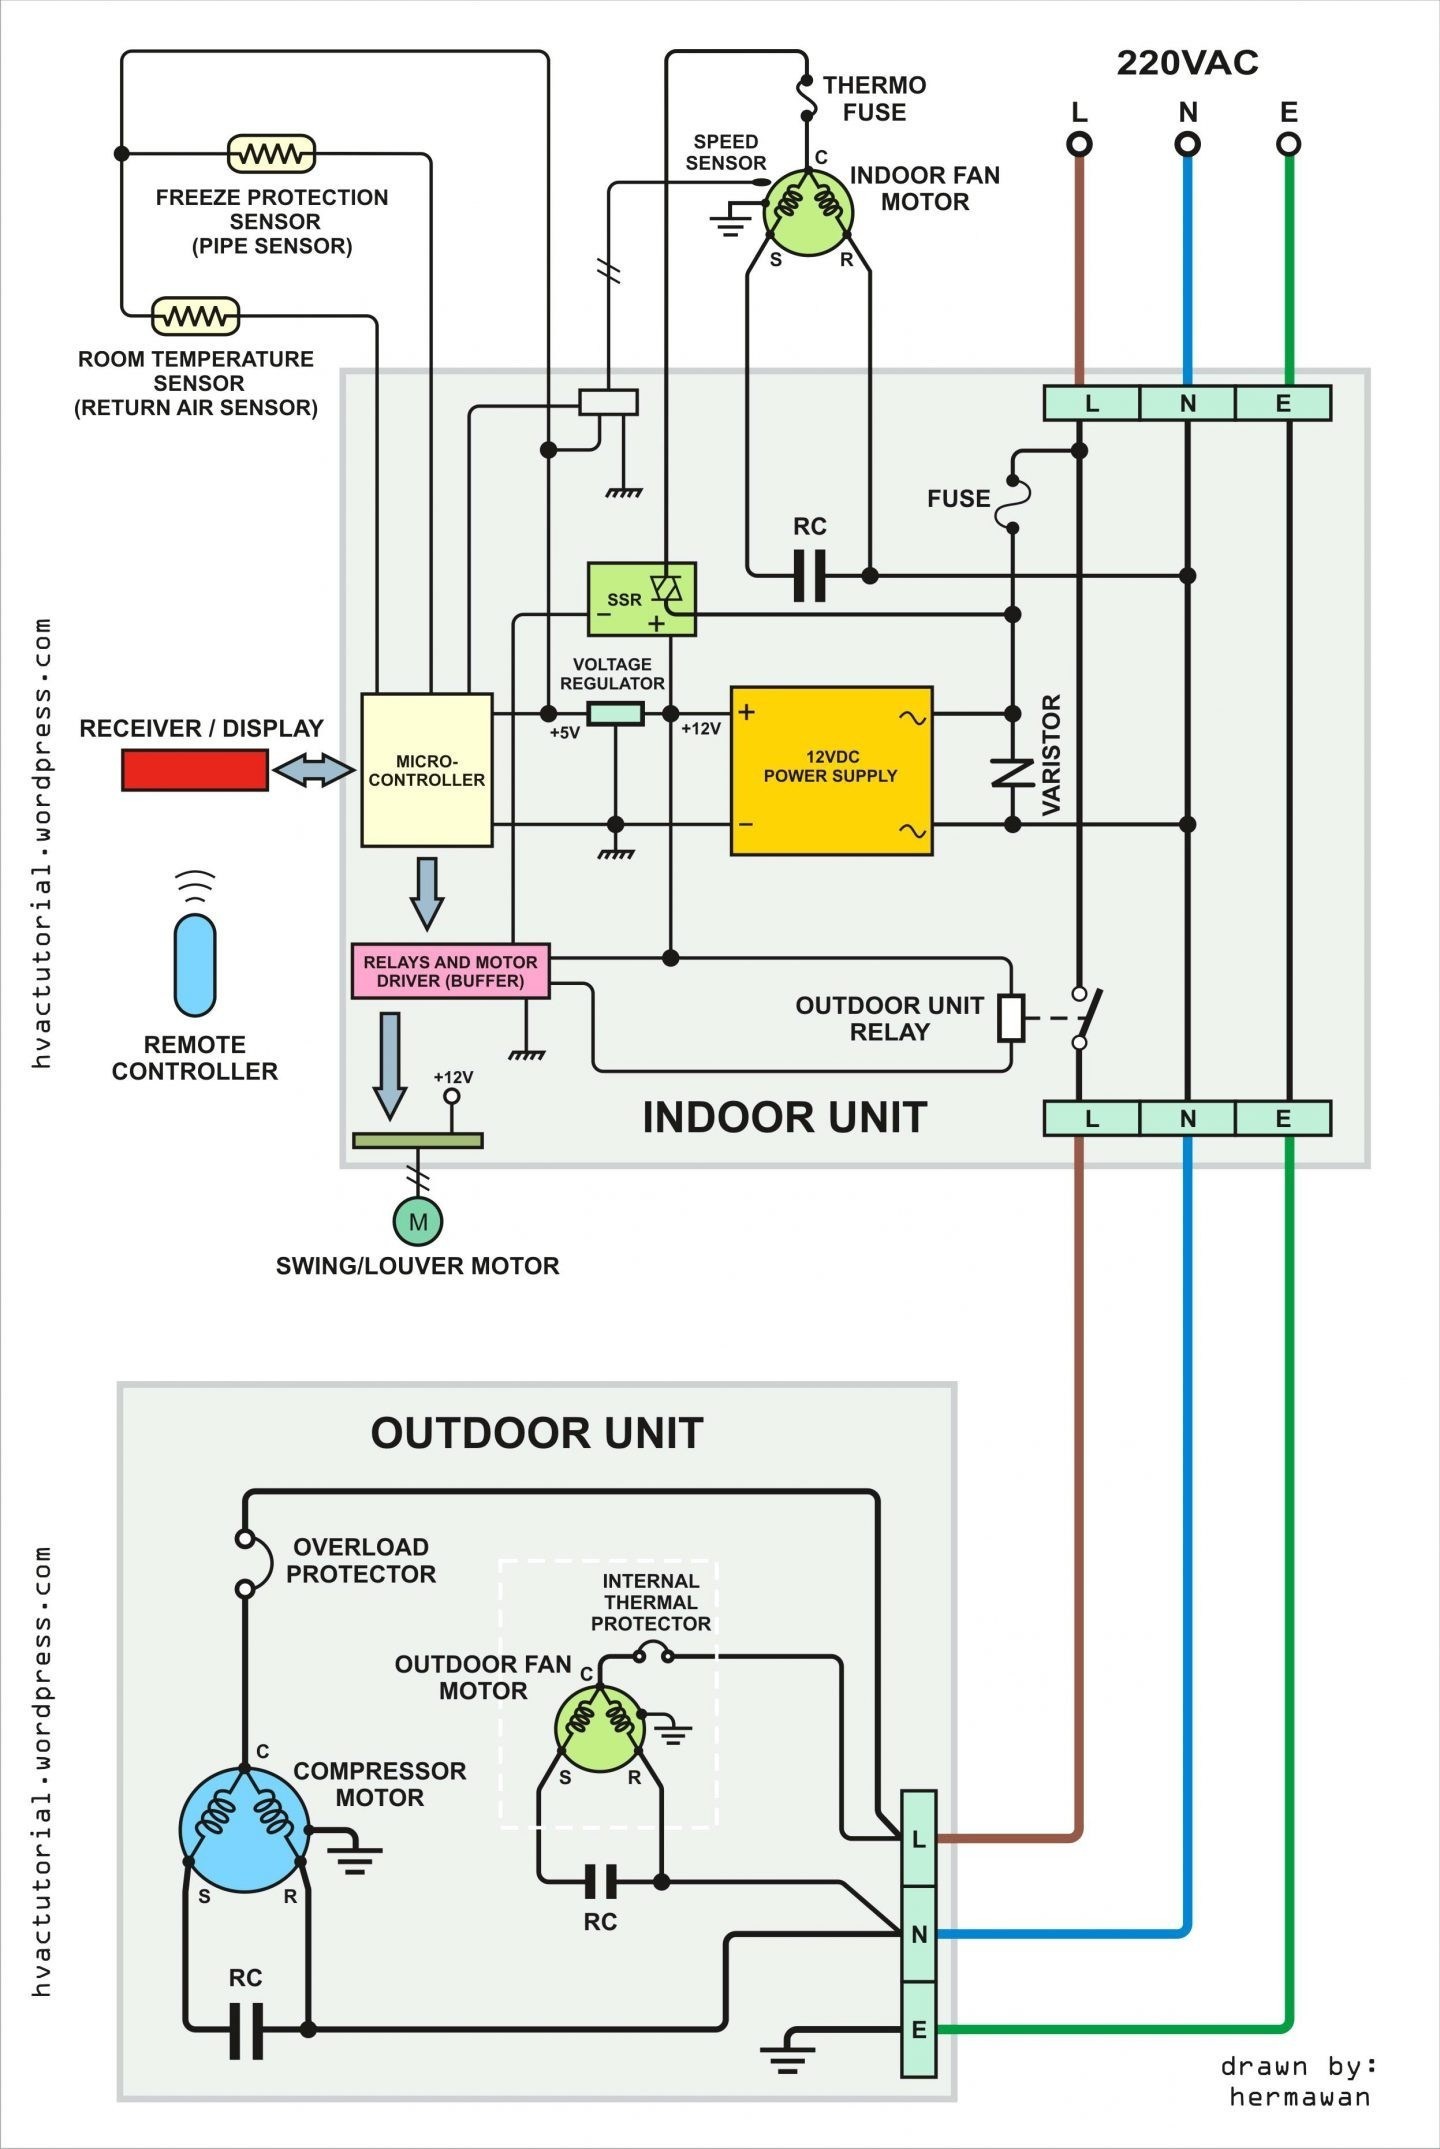 Heat Trace Wiring Diagram Unique Heat Trace Wiring Diagram Download Wiring Diagrams •